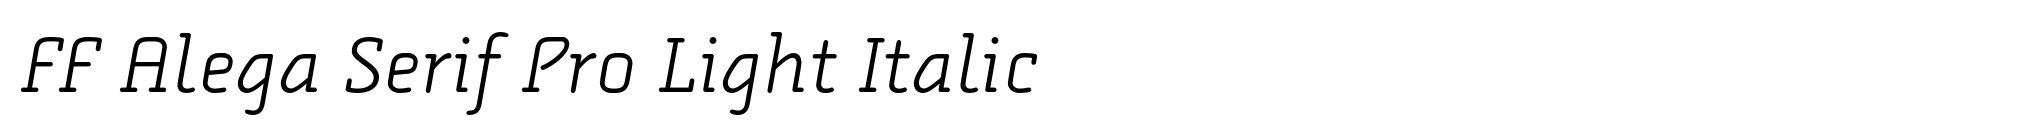 FF Alega Serif Pro Light Italic image